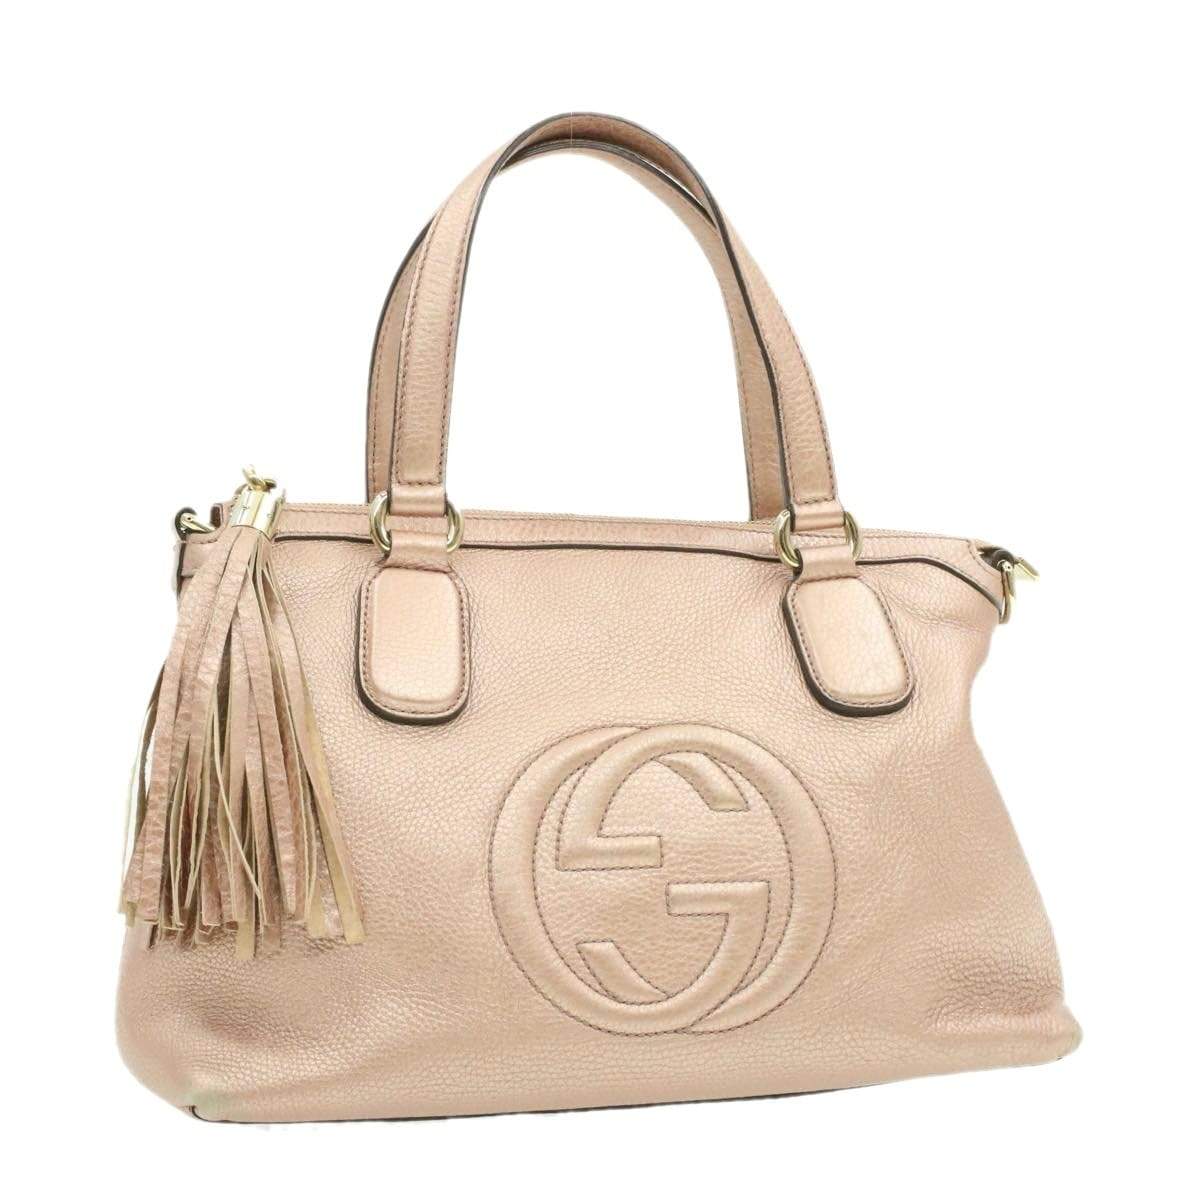 Gucci Gucci Soho Fringe Handbag